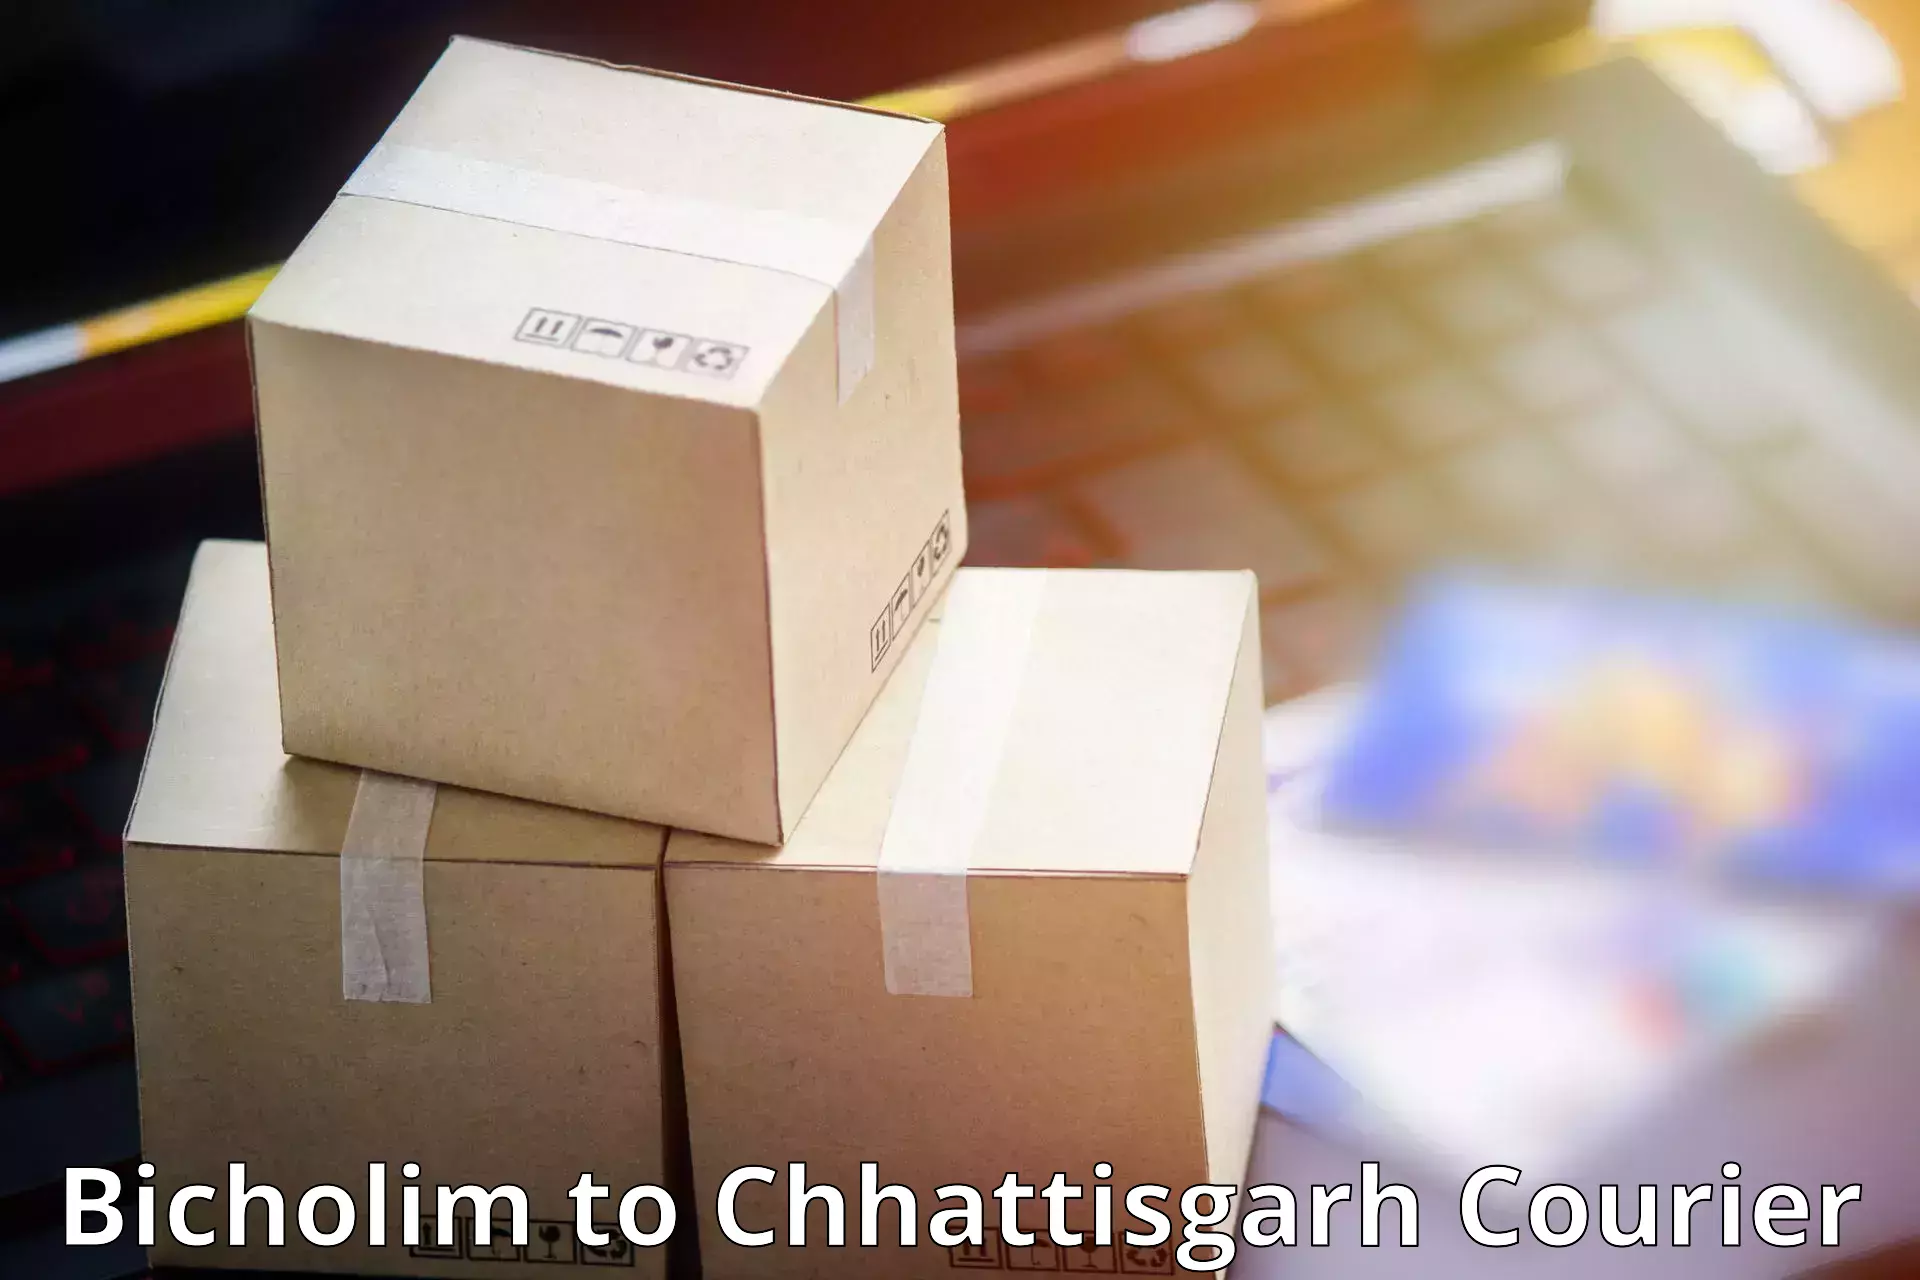 Courier service innovation in Bicholim to Khairagarh